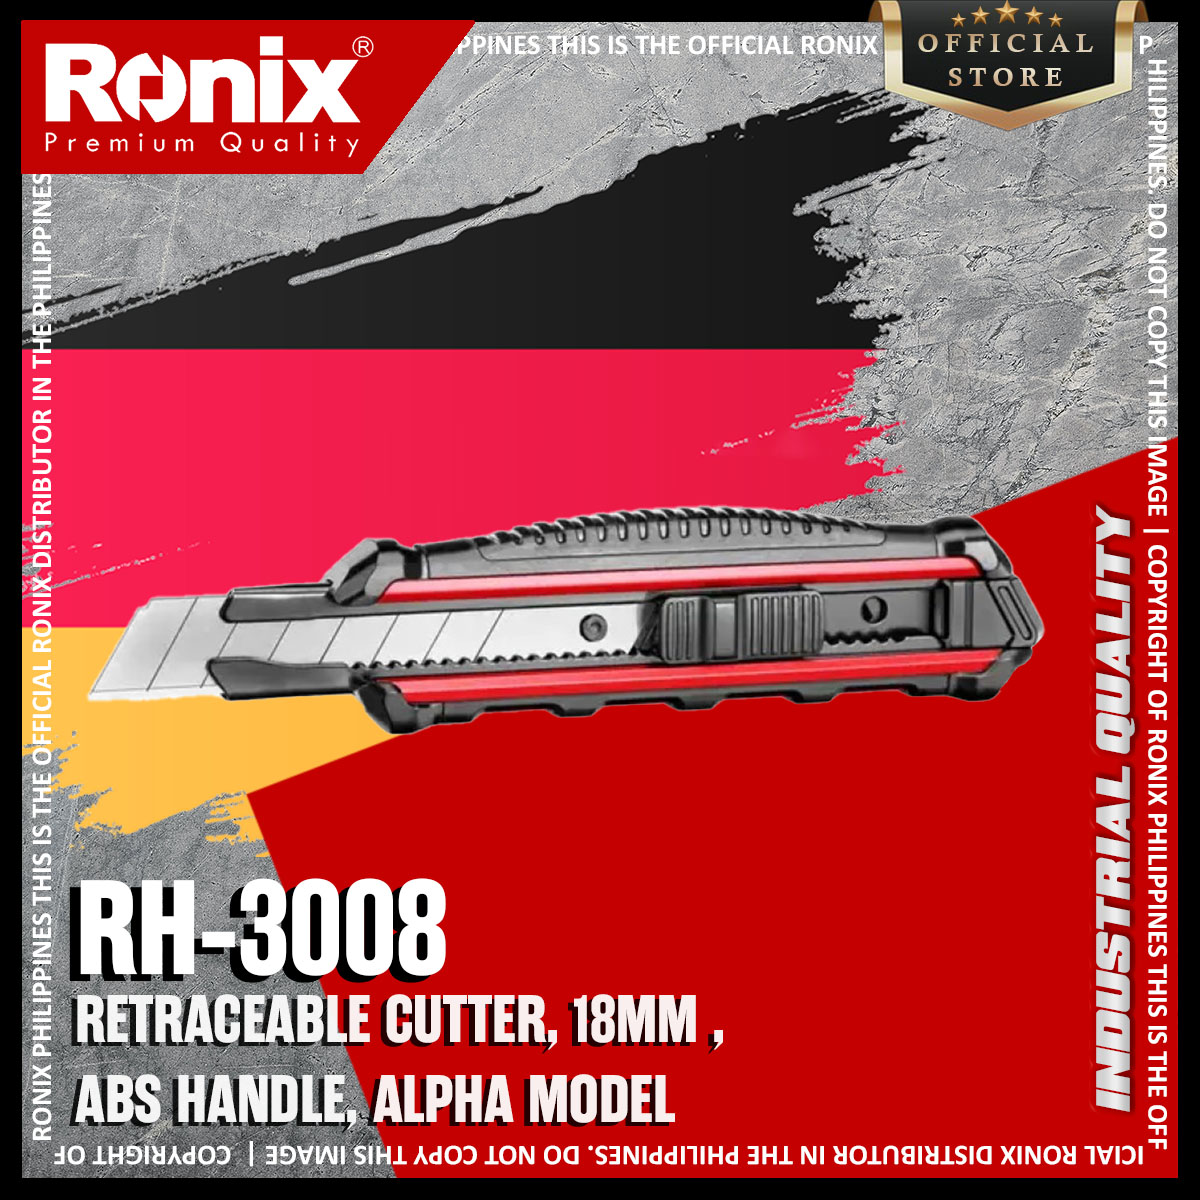 Retraceable Cutter, 18mm , ABS Handle, Alpha Model - RH-3008